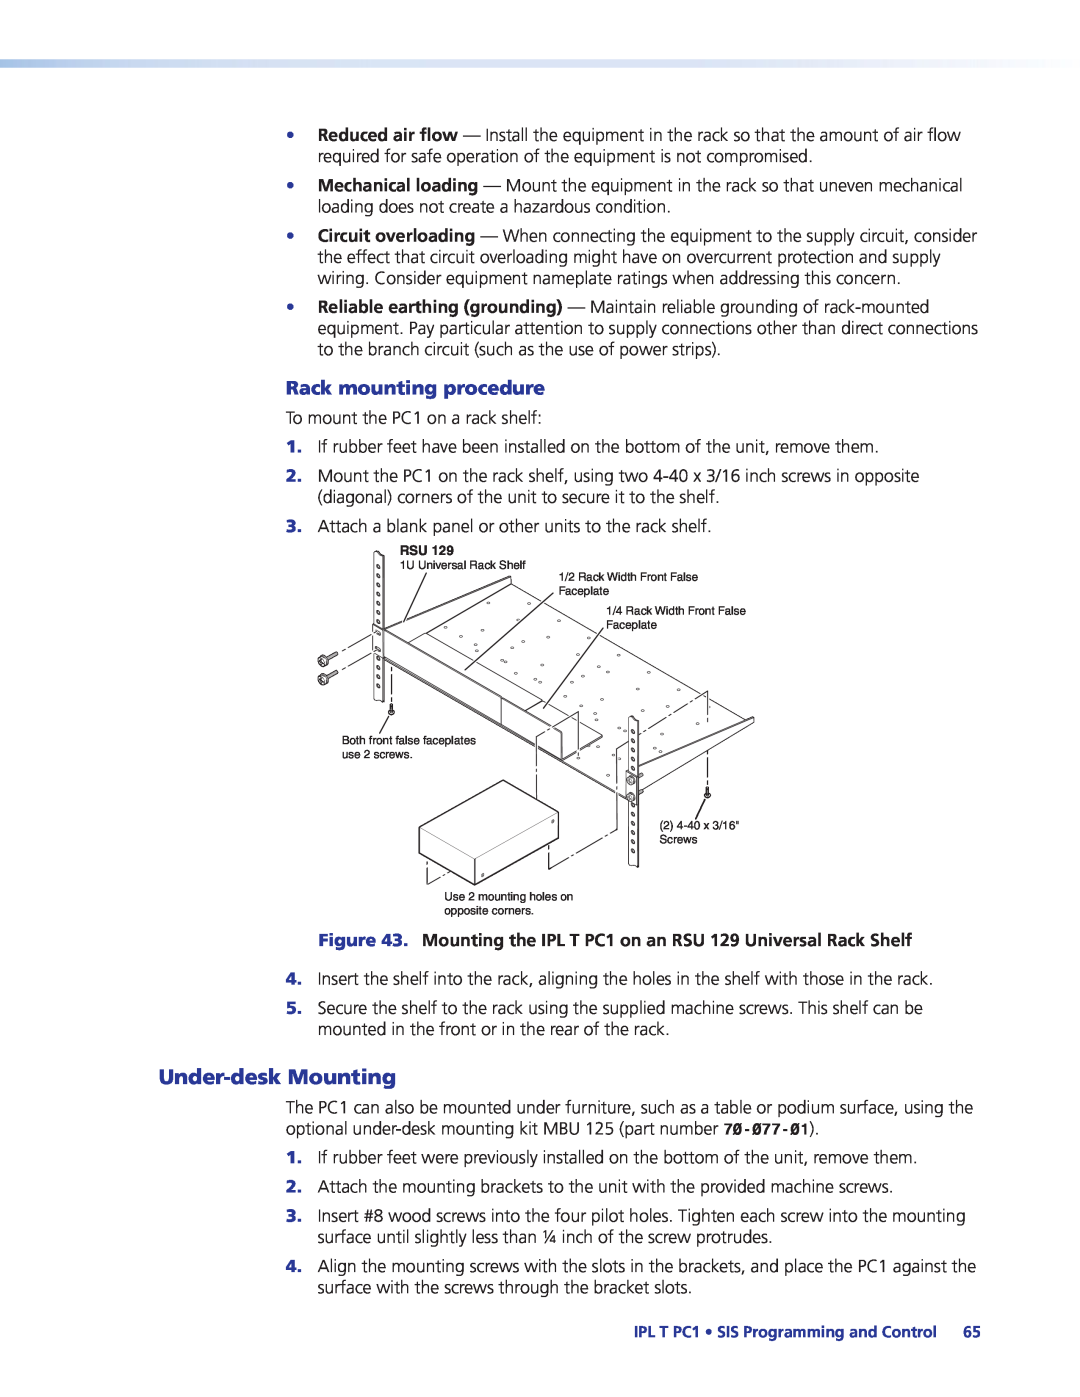 Extron electronic IPL T PC1i manual Under-desk Mounting, Rack mounting procedure 